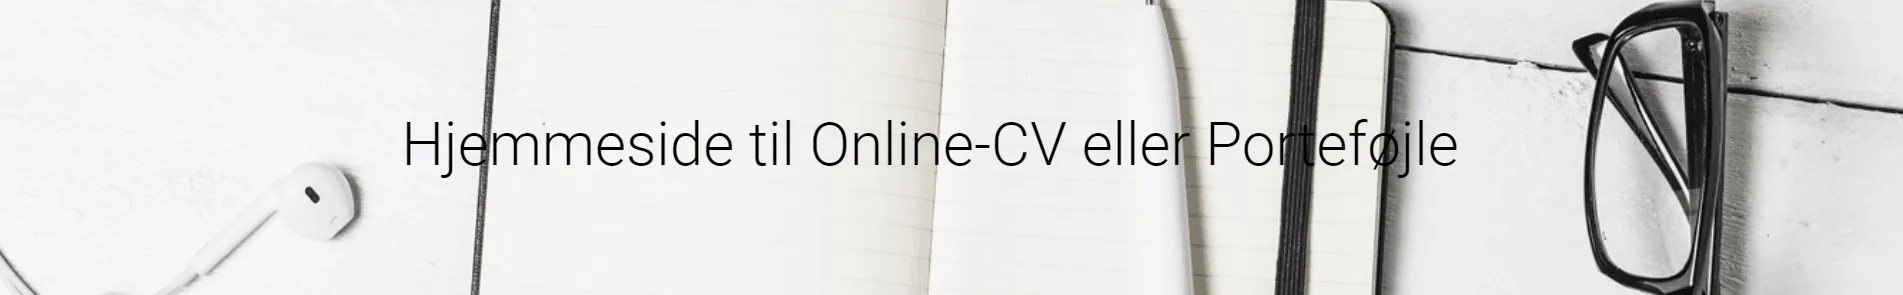 Online-CV - Lav din egen hjemmeside til Portfolio